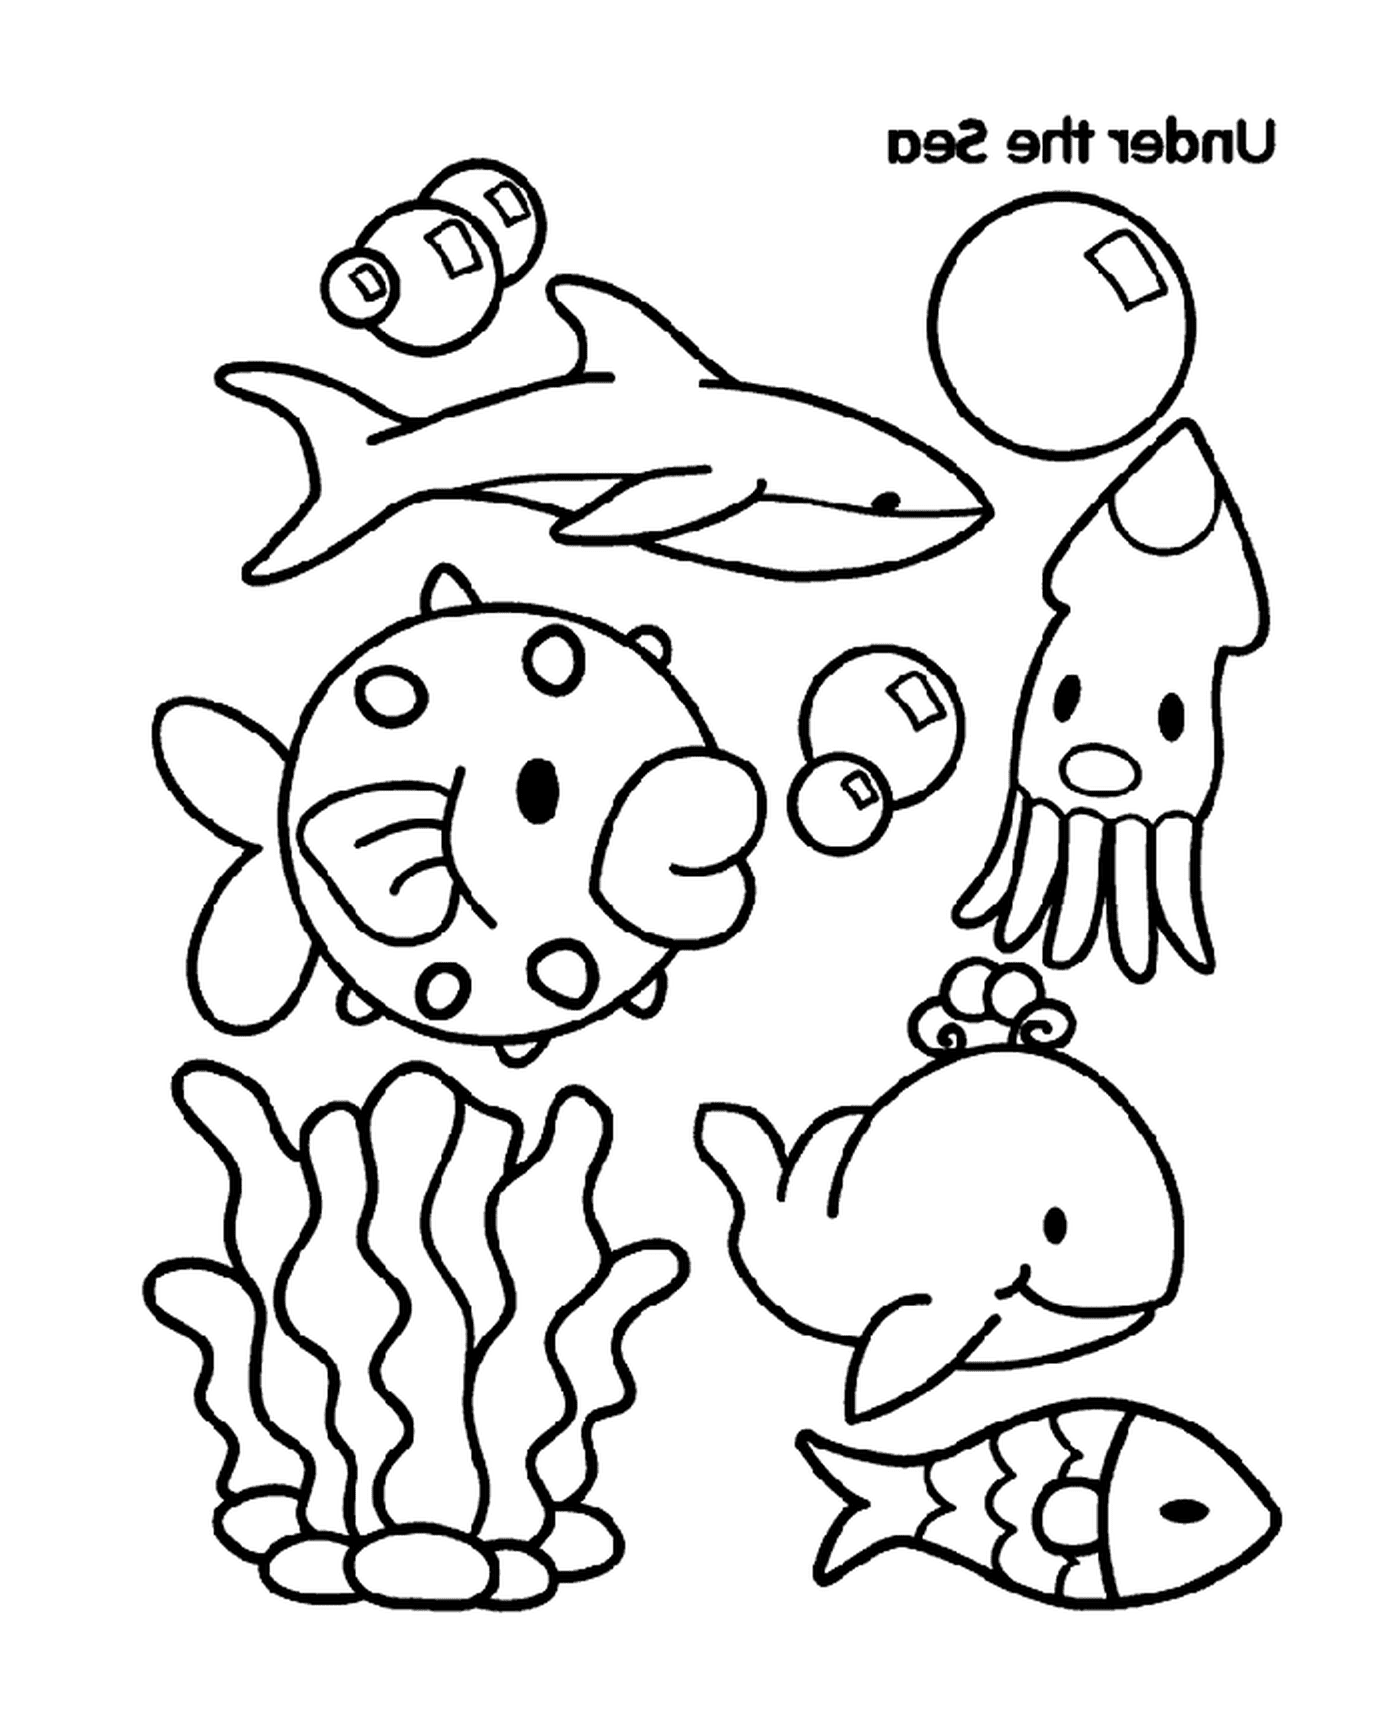  A group of marine animals 